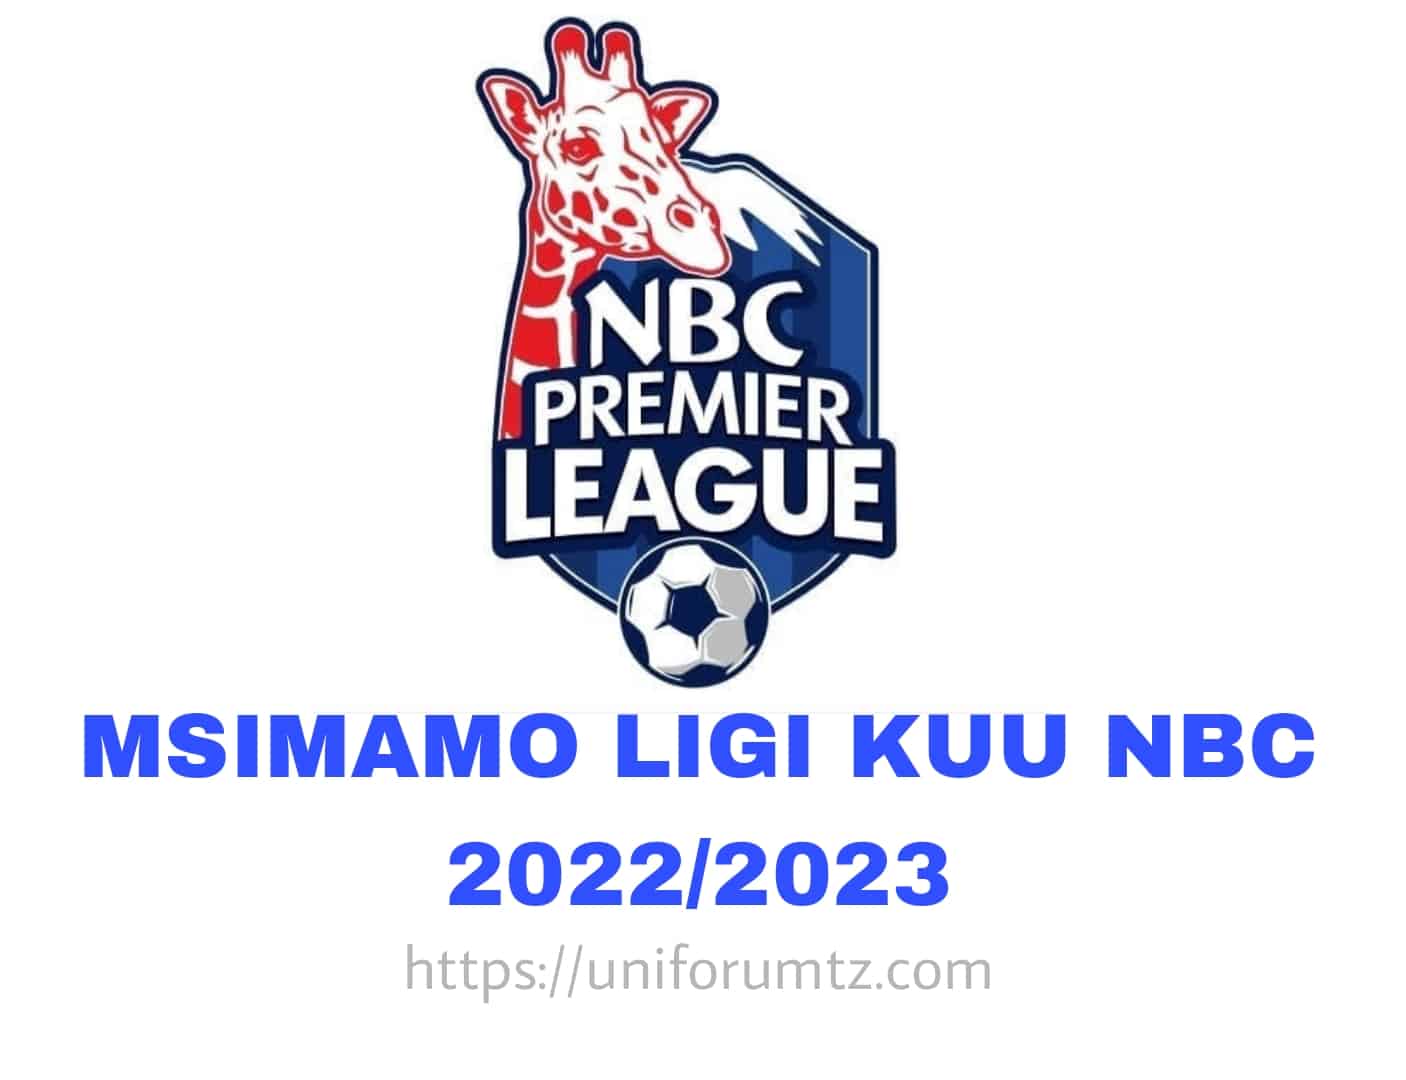 Msimamo Wa Ligi Kuu Tanzania 2022-2023, Tanzania Premier League Table 2022/2023